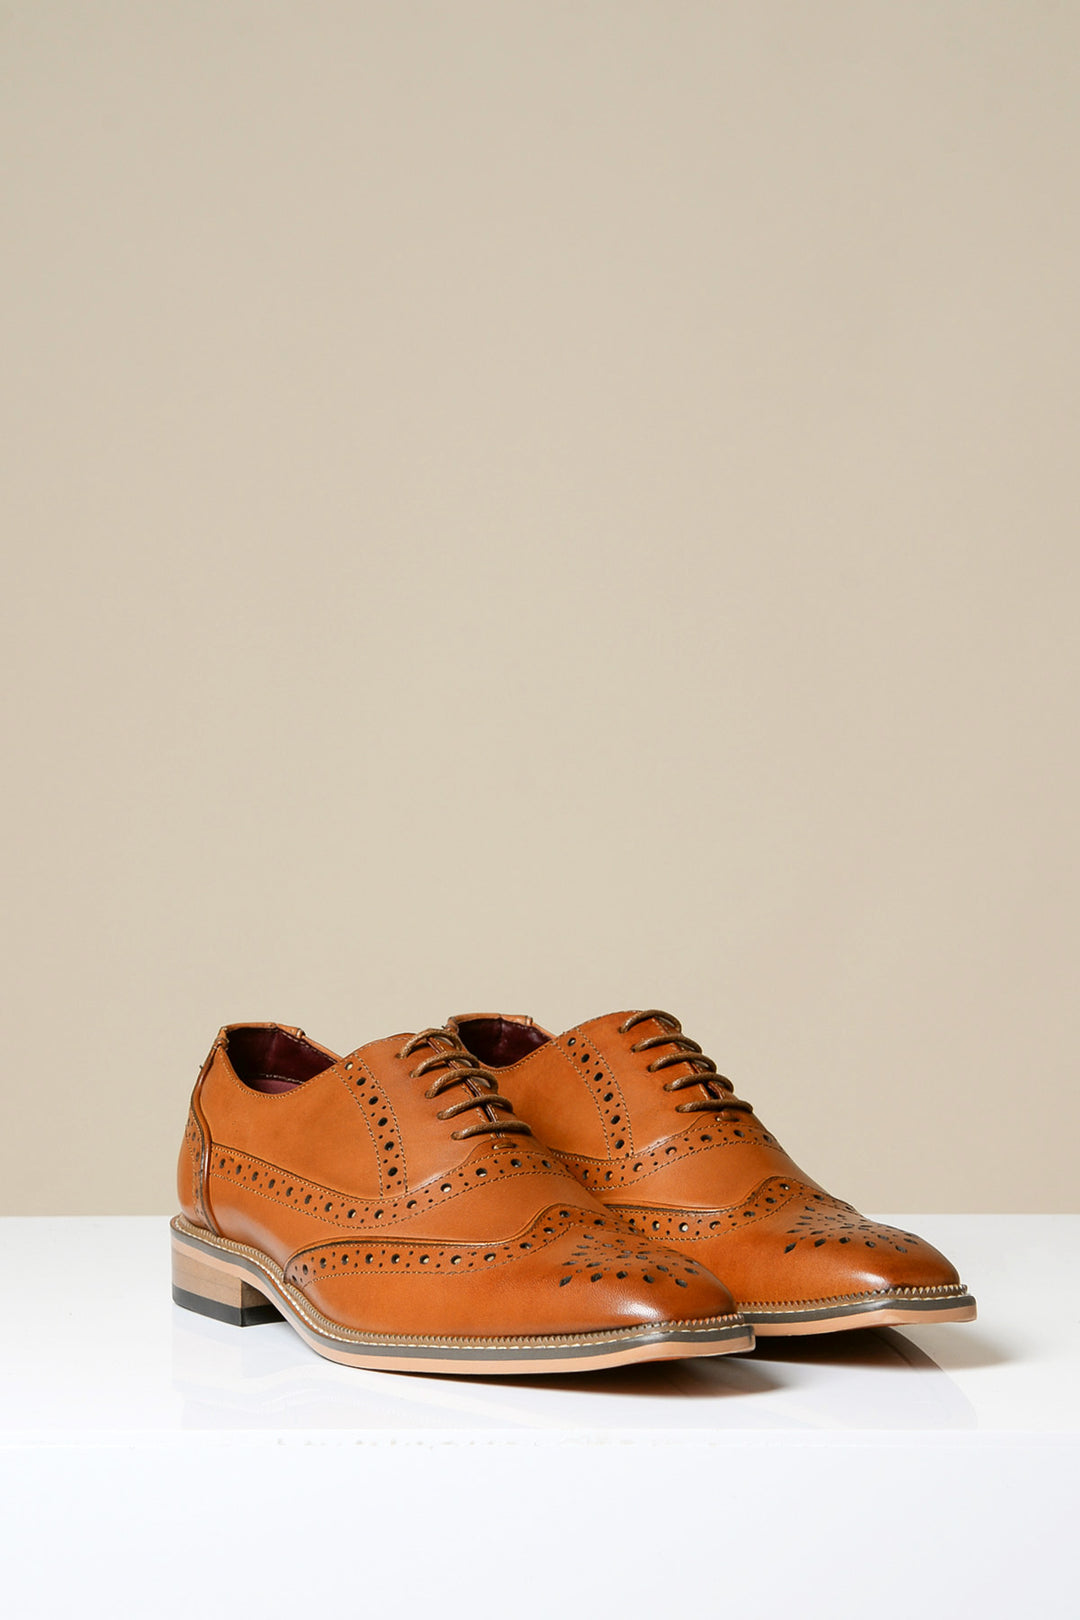 LARKIN - Tan Leather Brogue Shoe